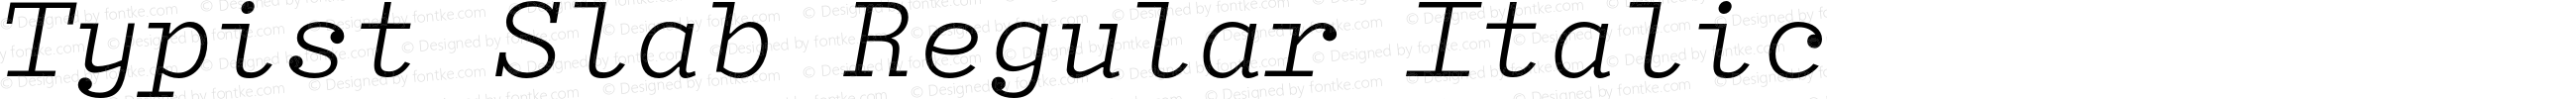 Typist Slab Regular Italic